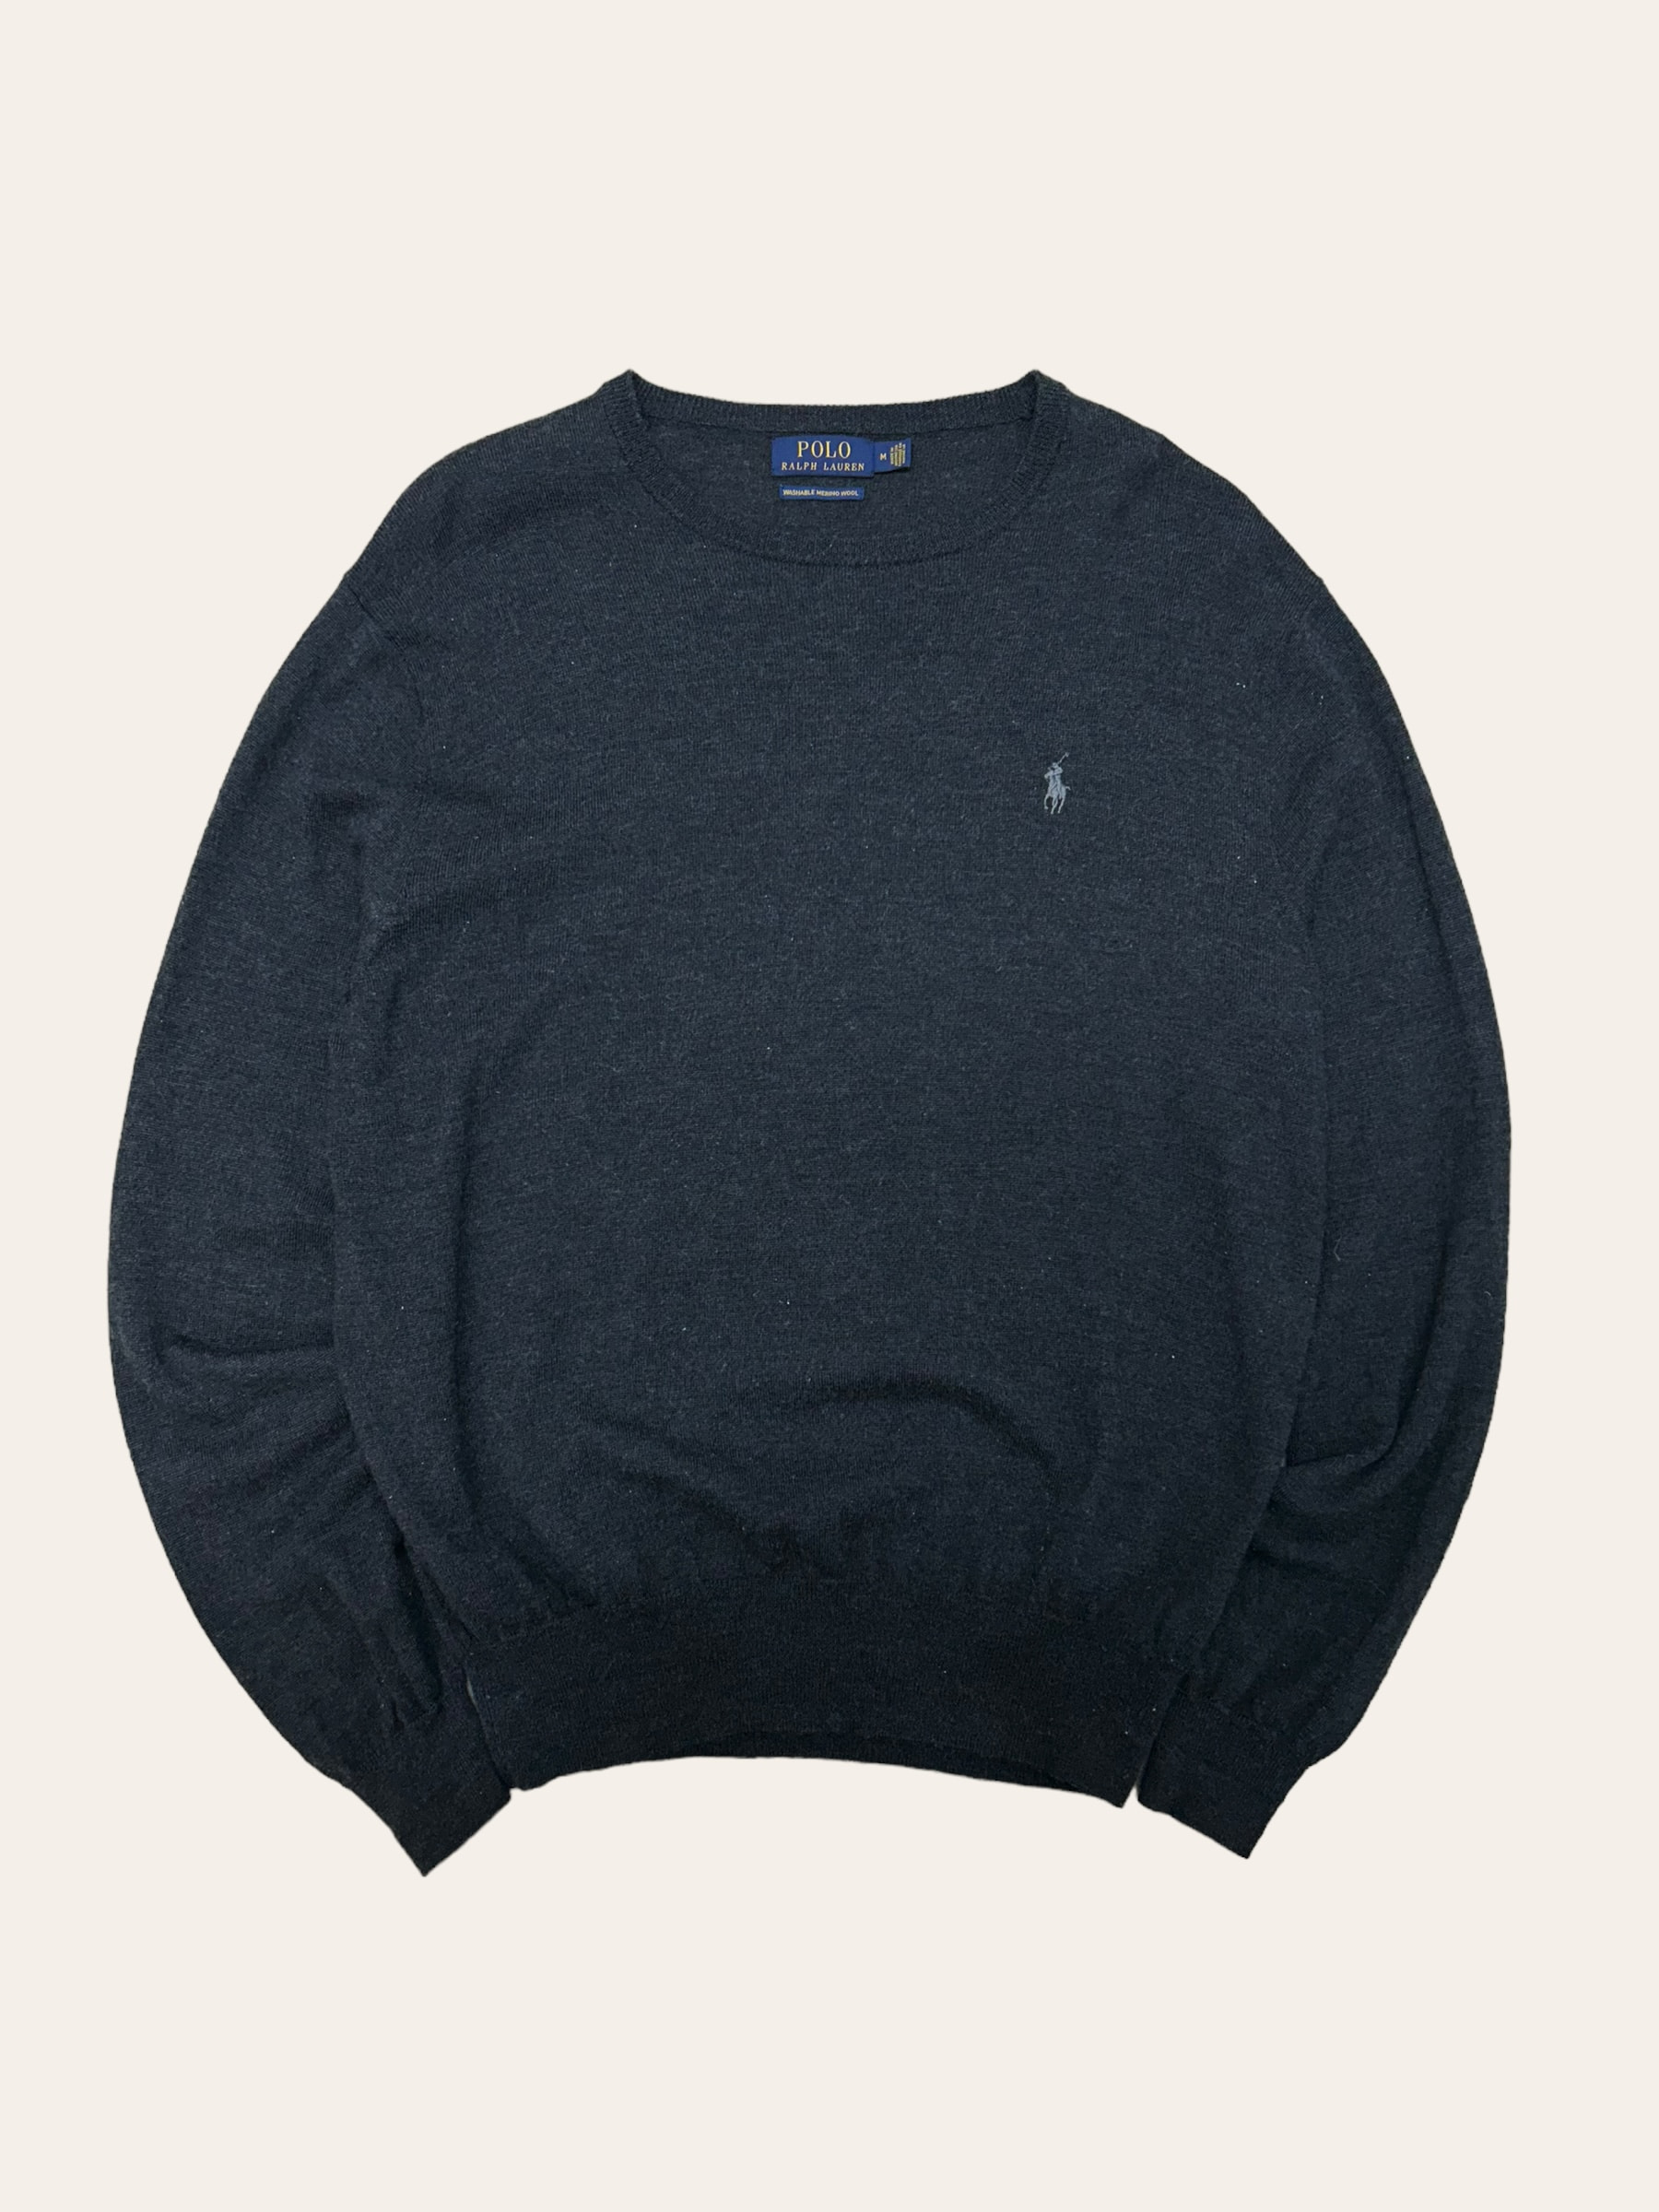 Polo ralph lauren charcoal washable merino wool crewneck sweater M